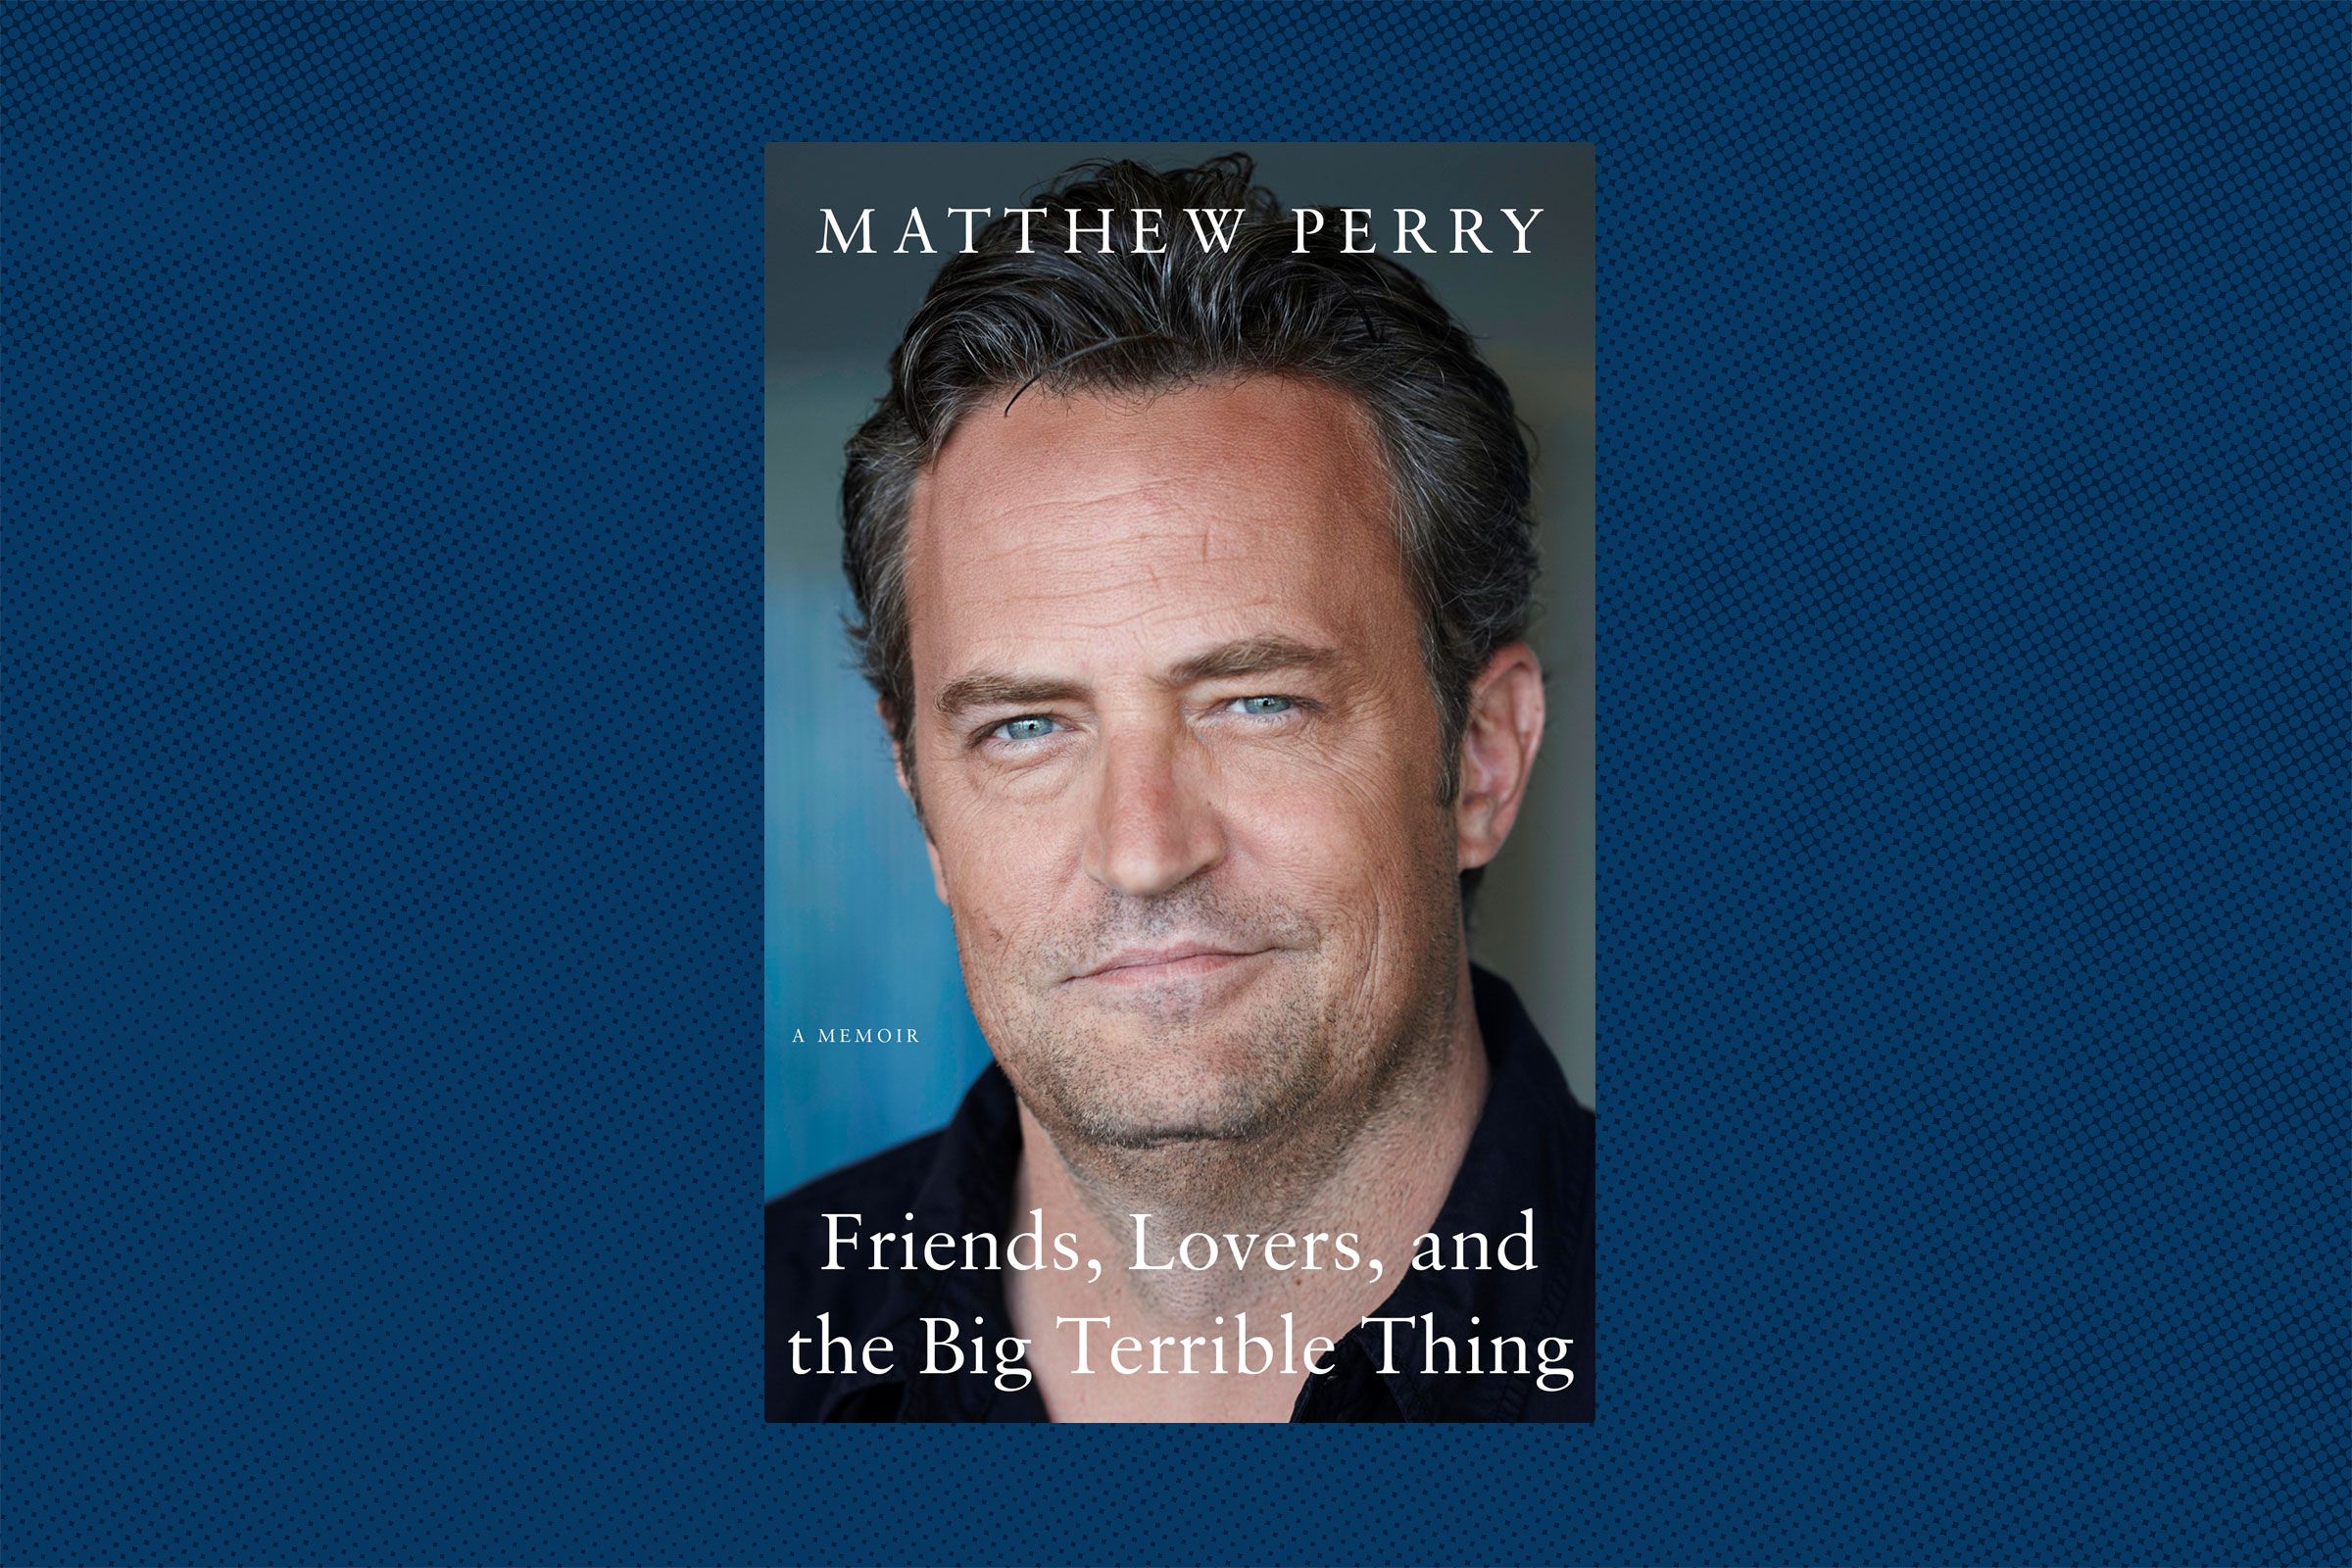 Matthew Perry's new memoir